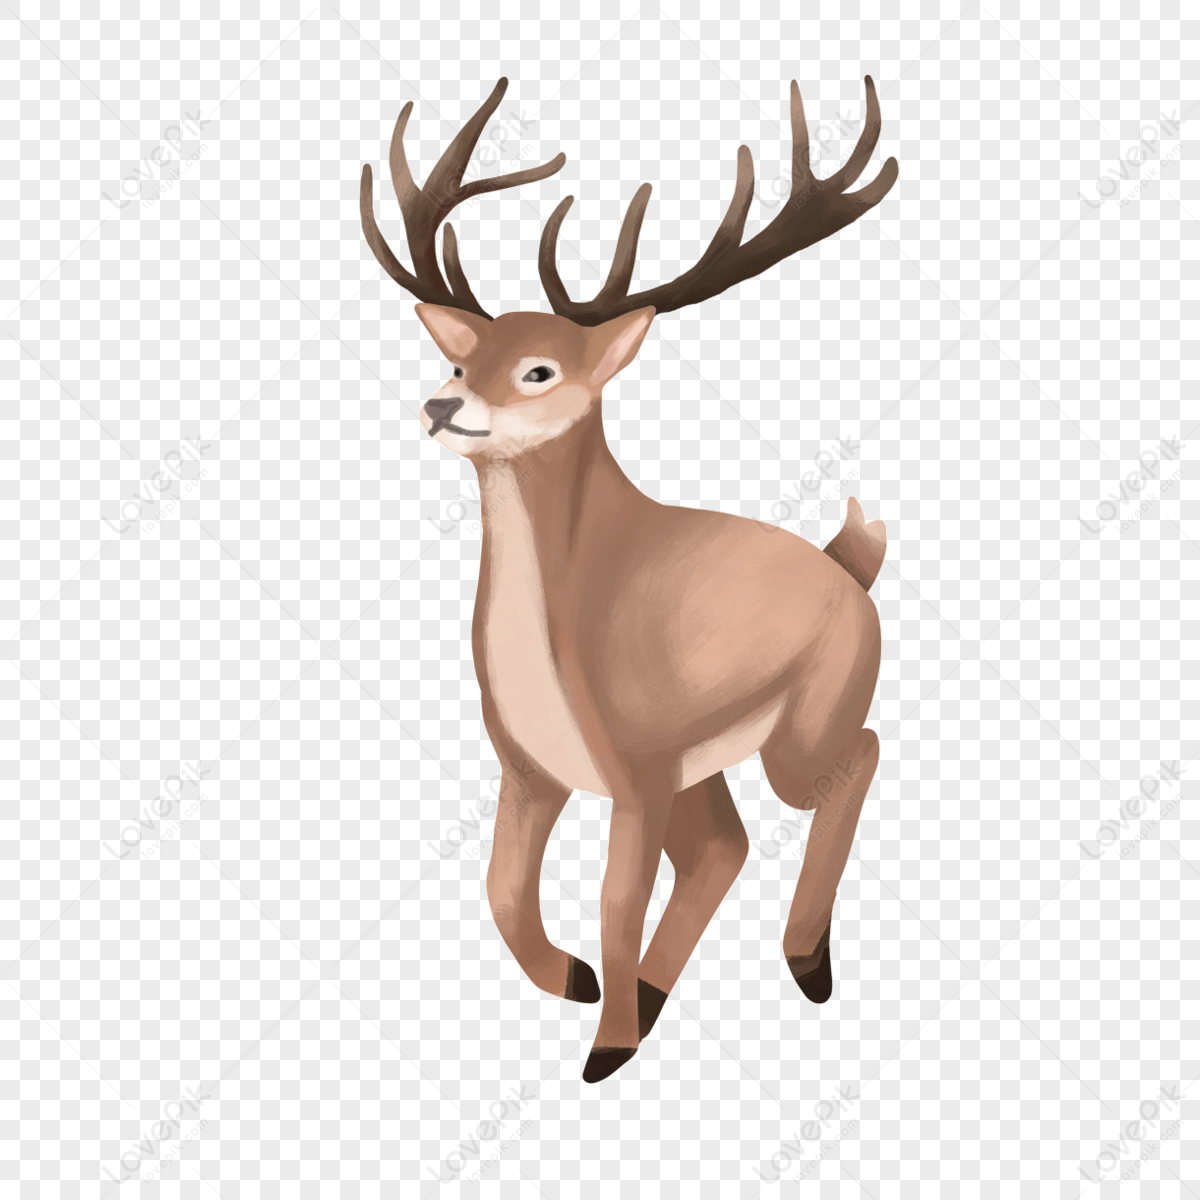 Happy running wild animal elk clipart,reindeer,deer png white transparent